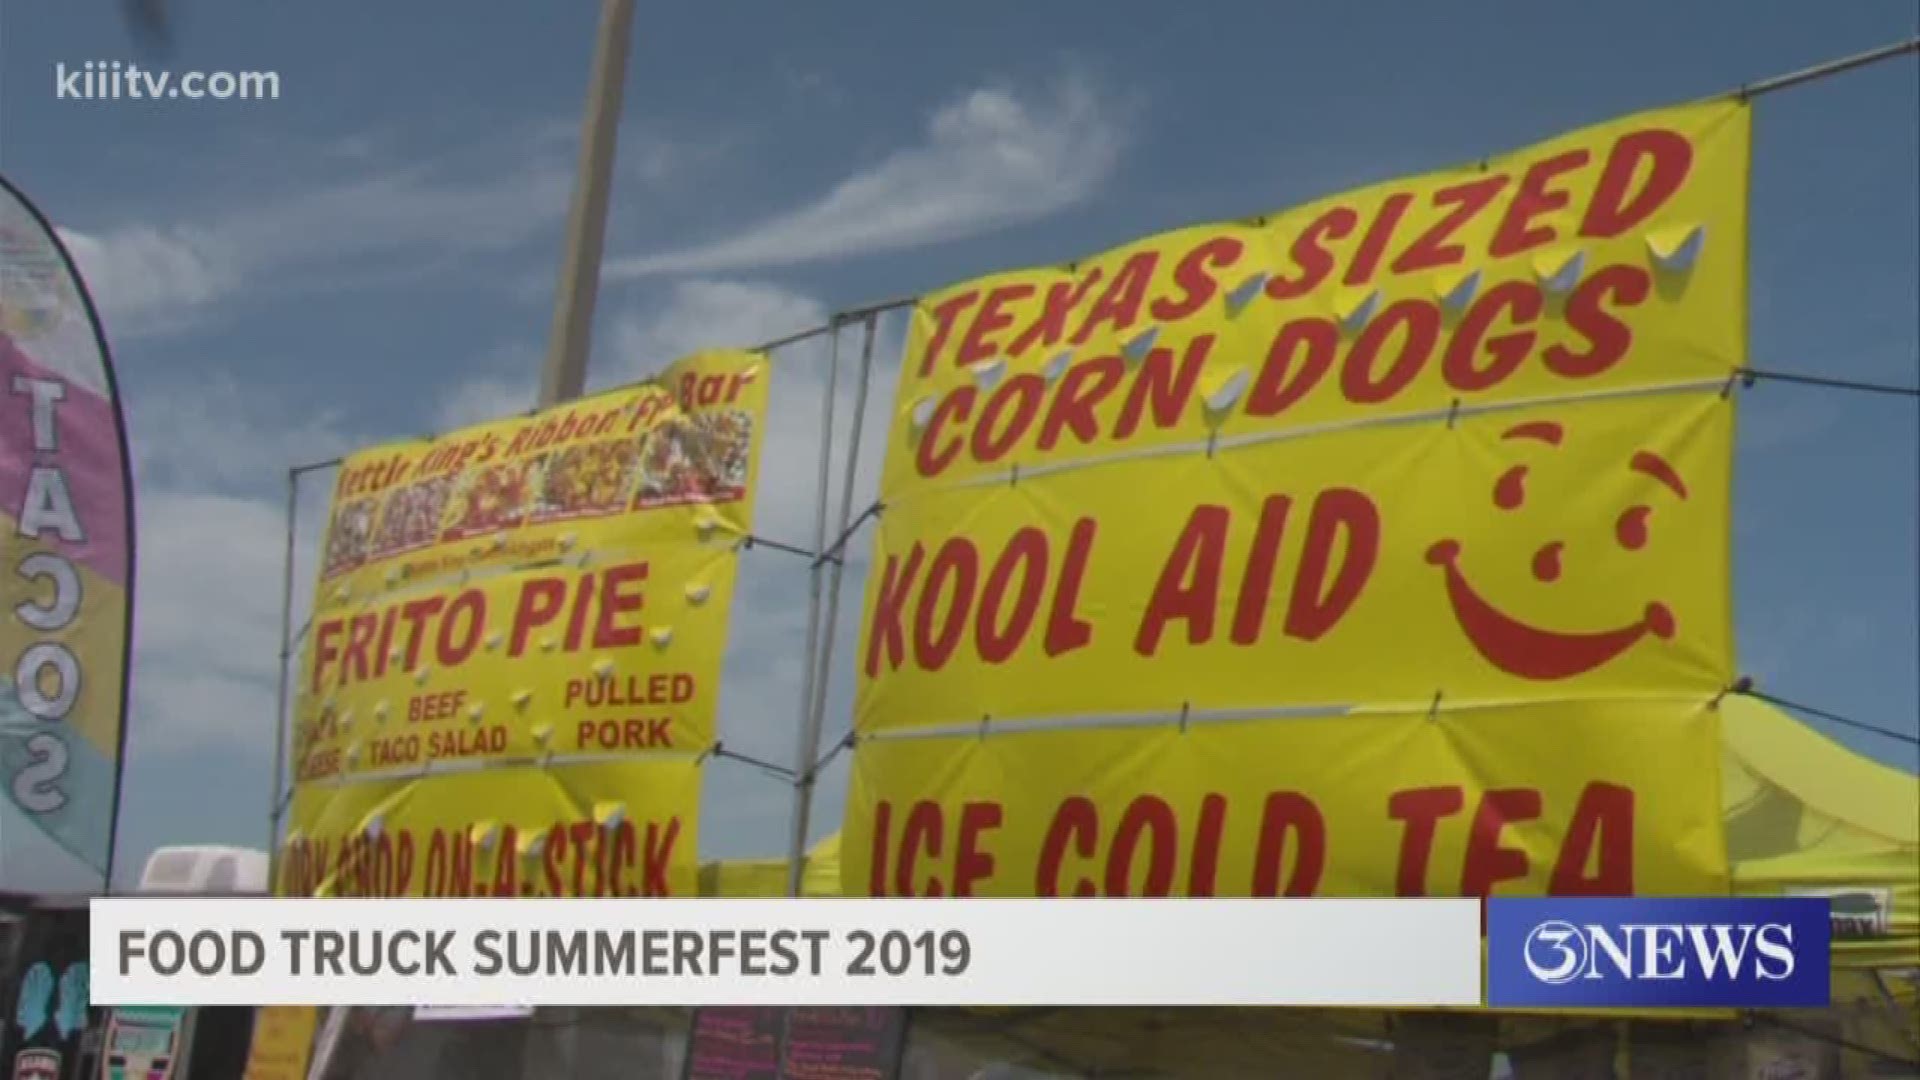 The 4th annual SummerFest kicked off Saturday in Corpus Christi